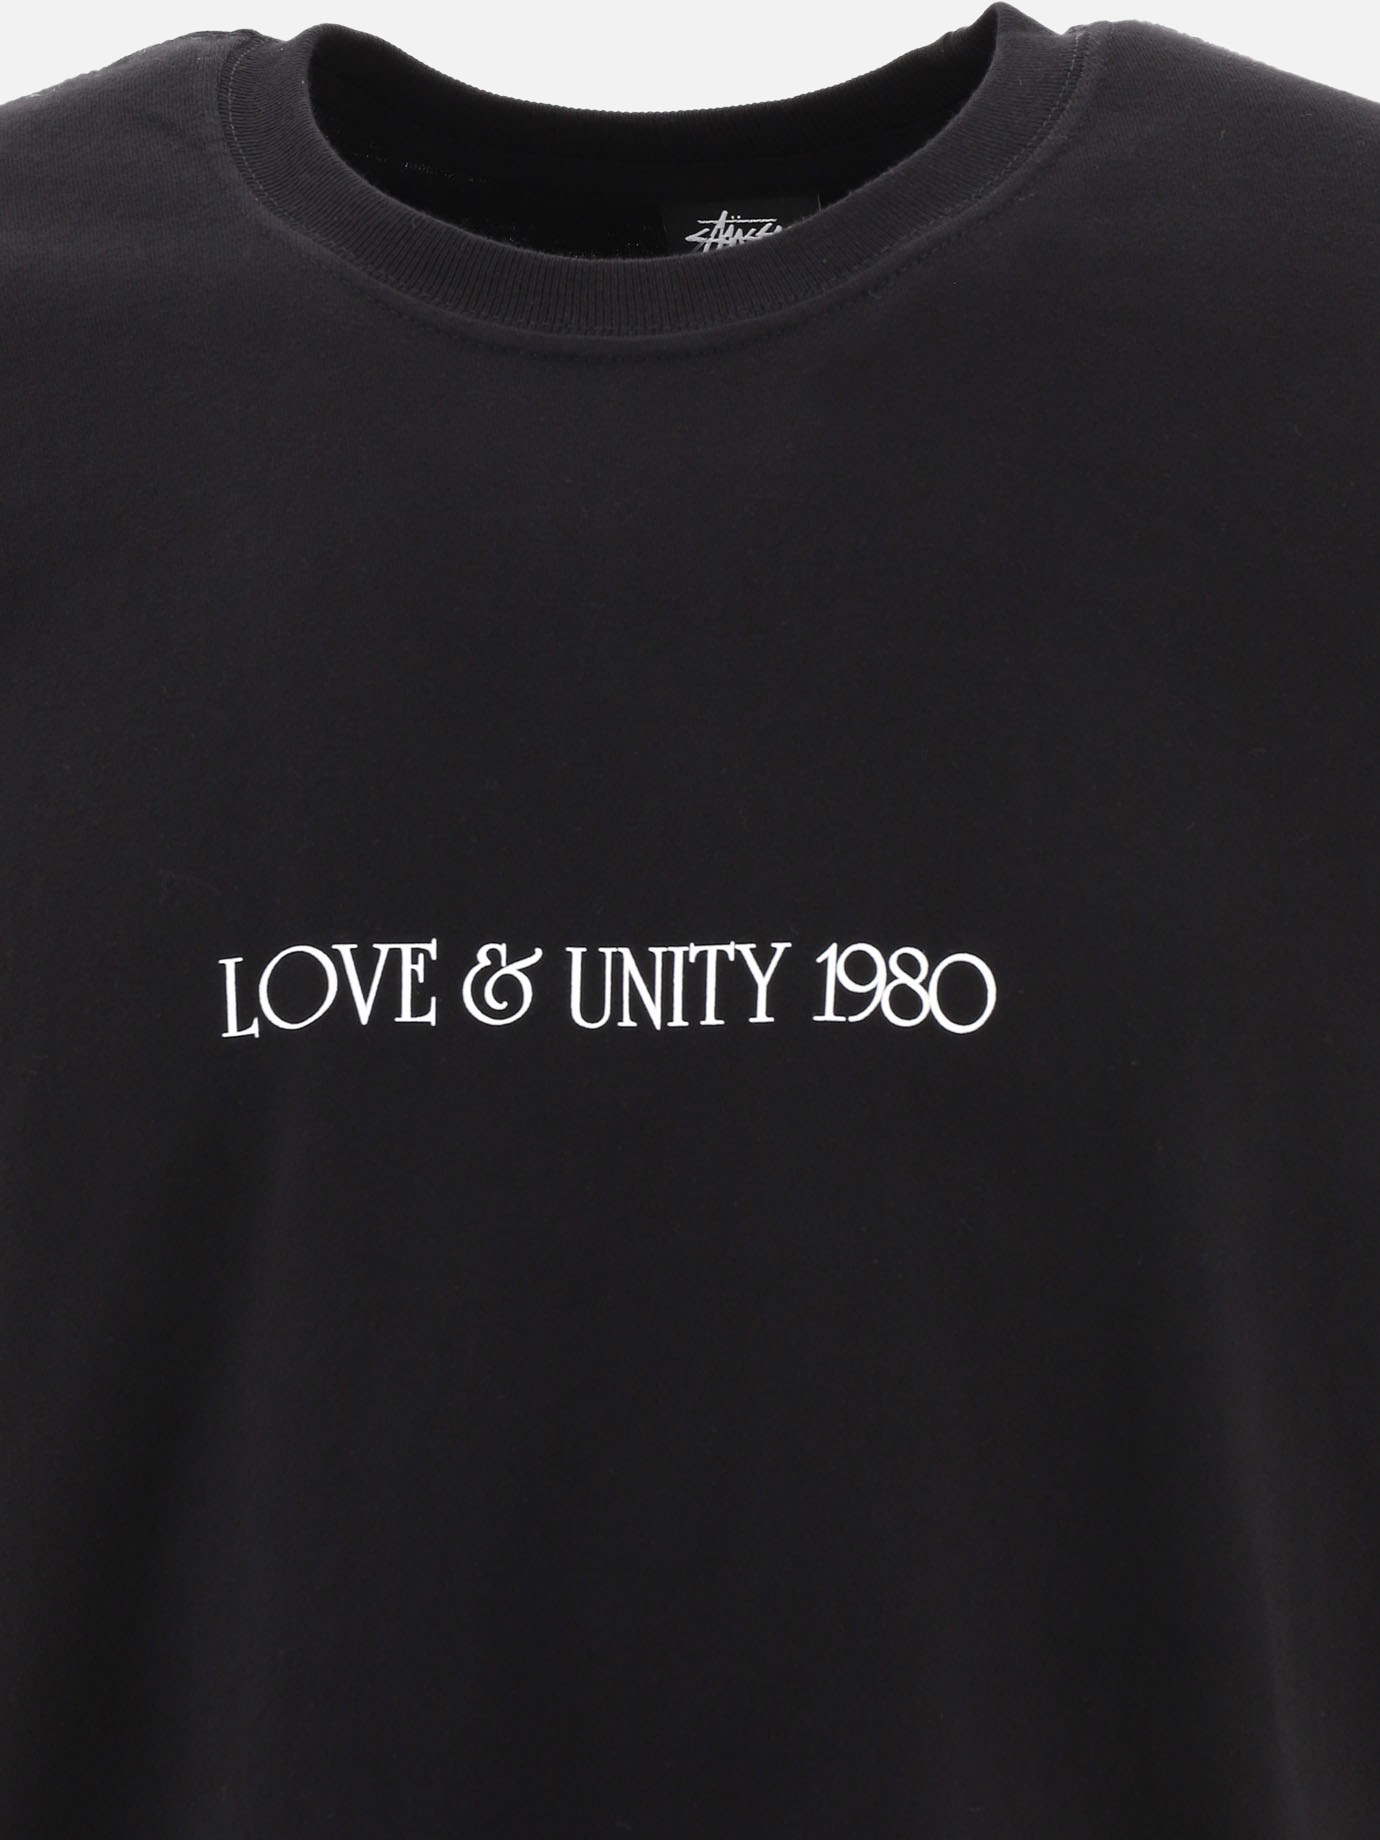  Love & Unity  t-shirt by Stüssy